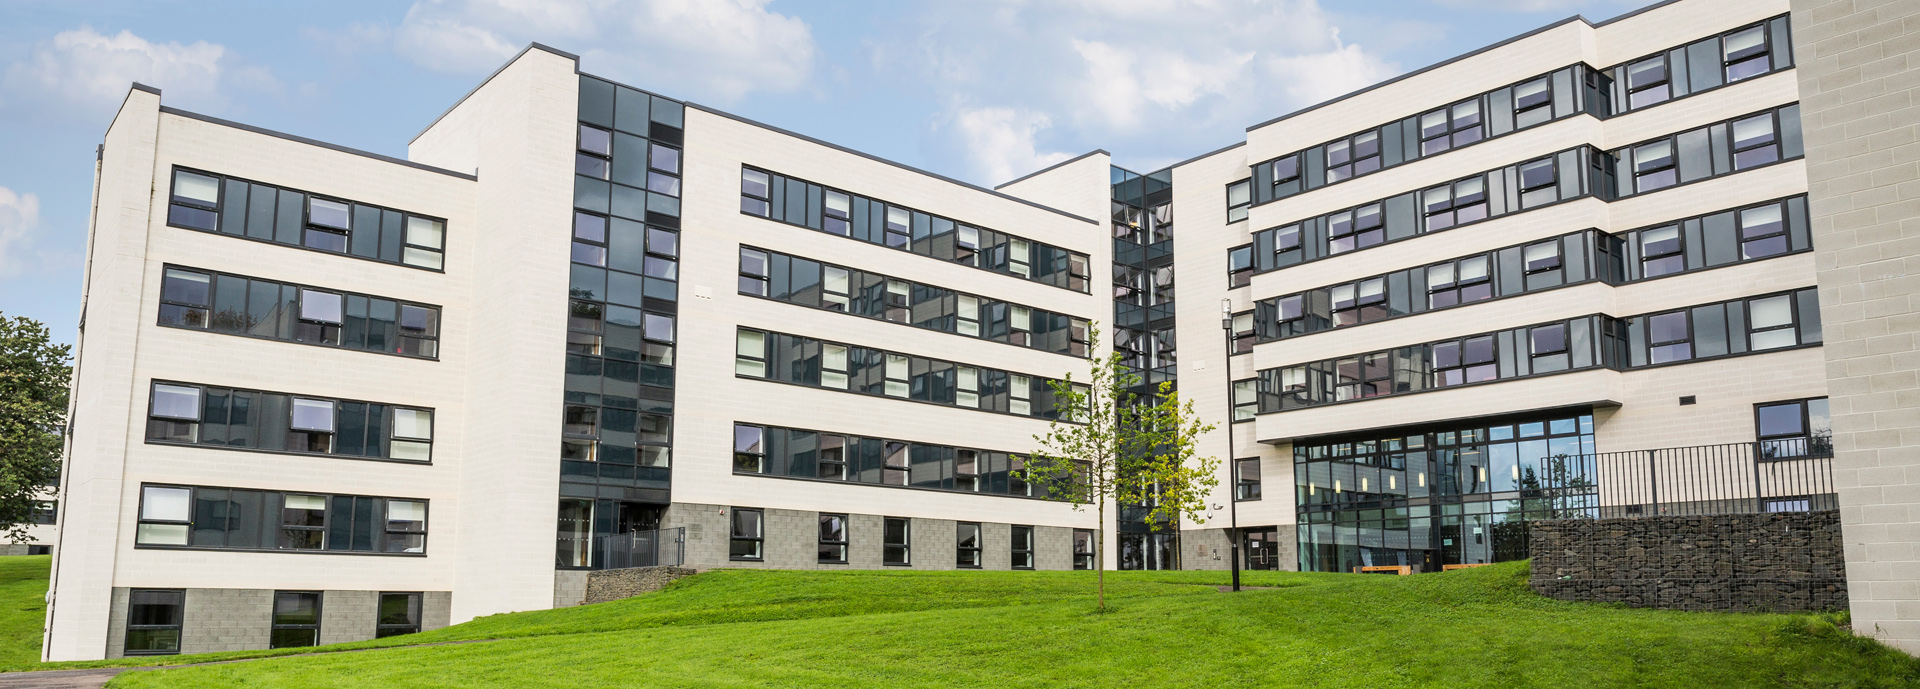 Juniper Court standard flats accommodation,  University of Stirling